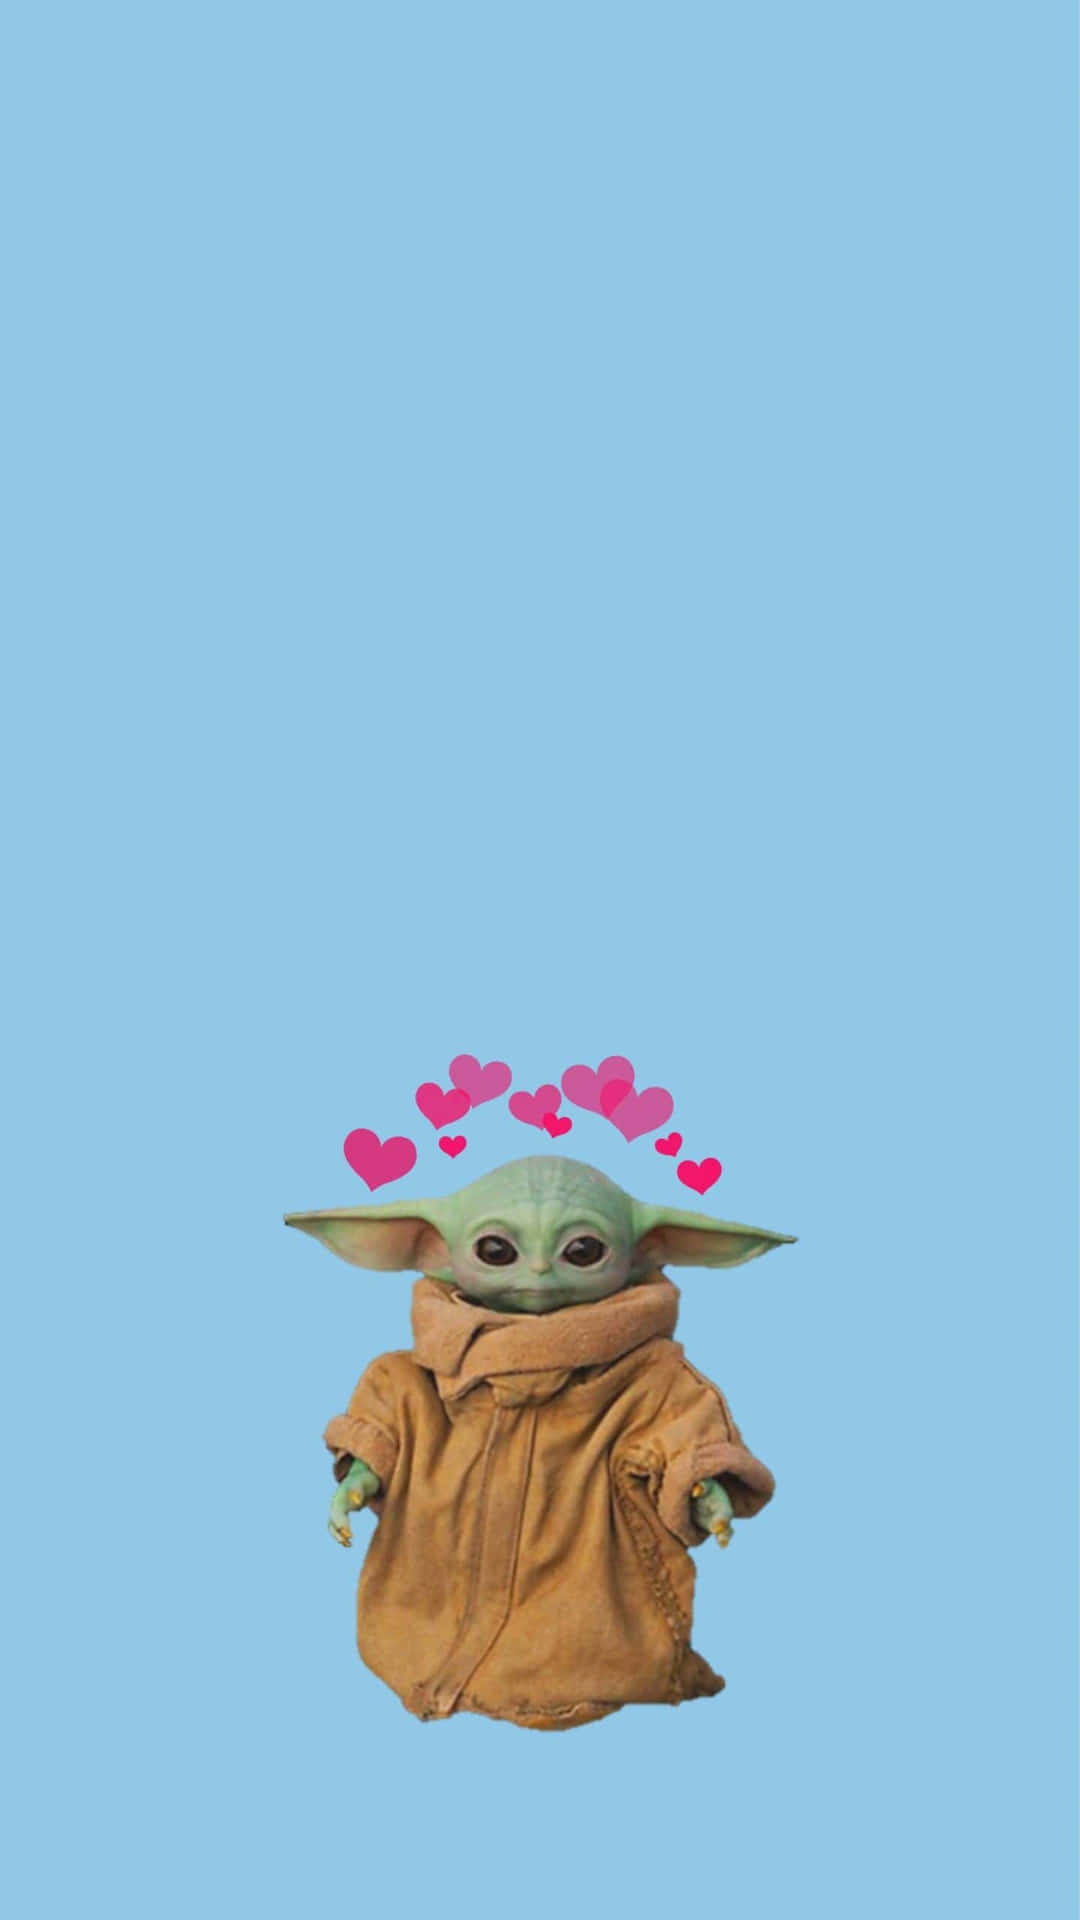 Yoda the Jedi Master Wallpaper